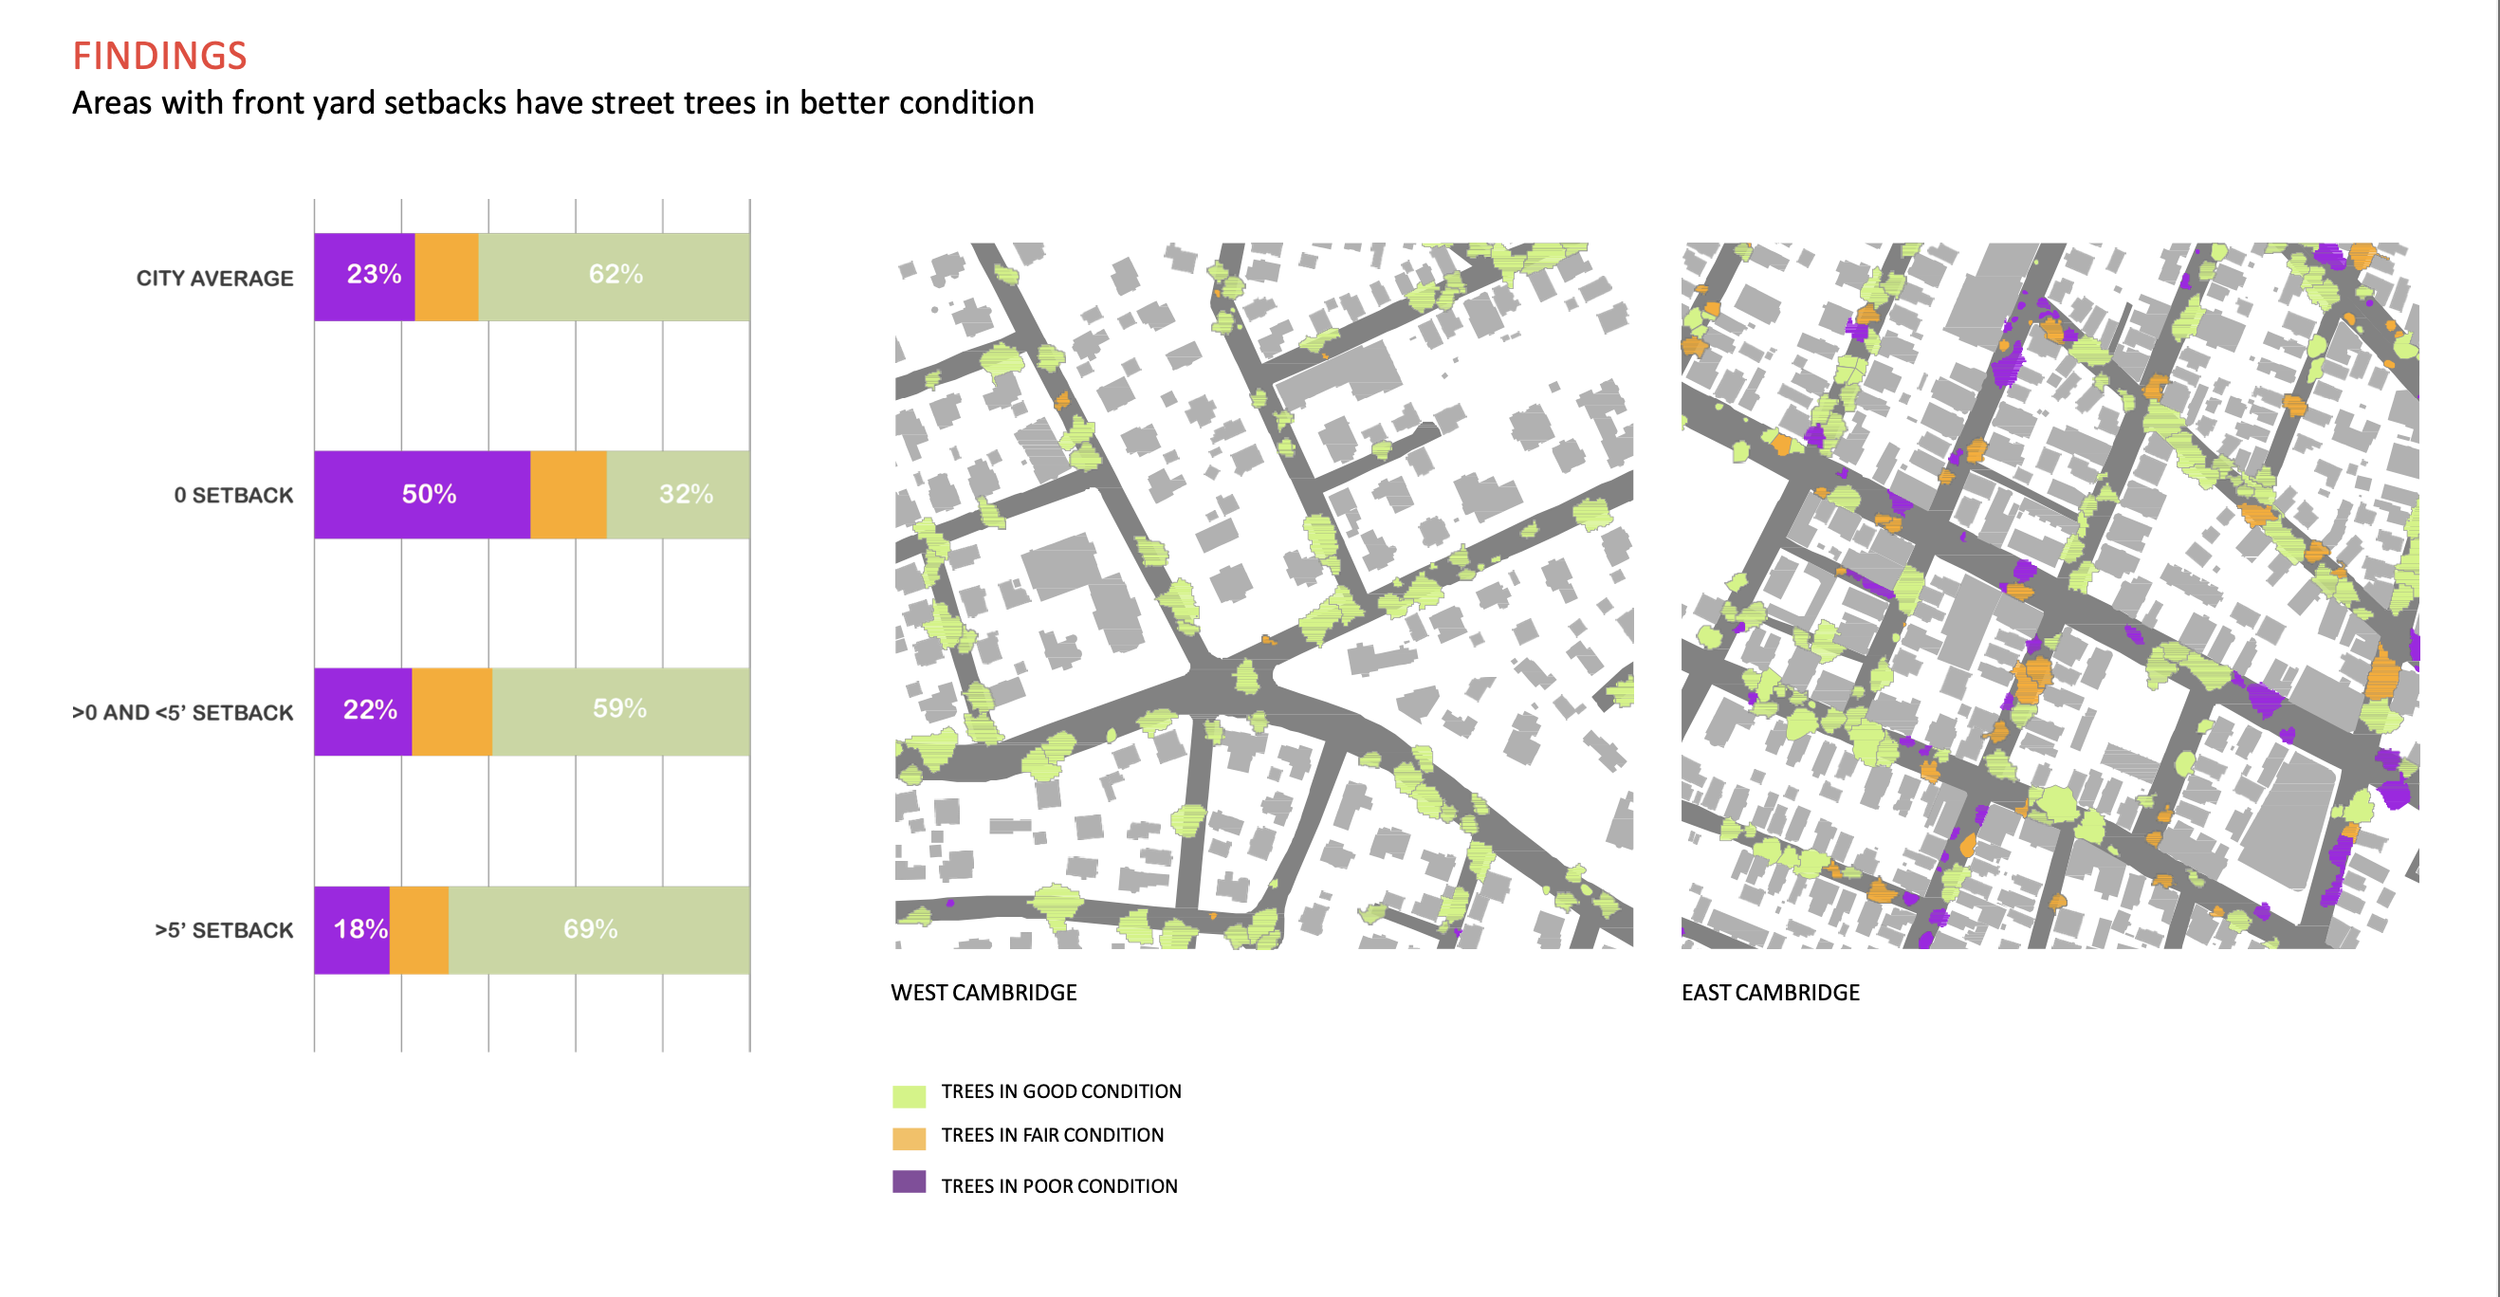 Urban Forest Master Plan — Green Cambridge